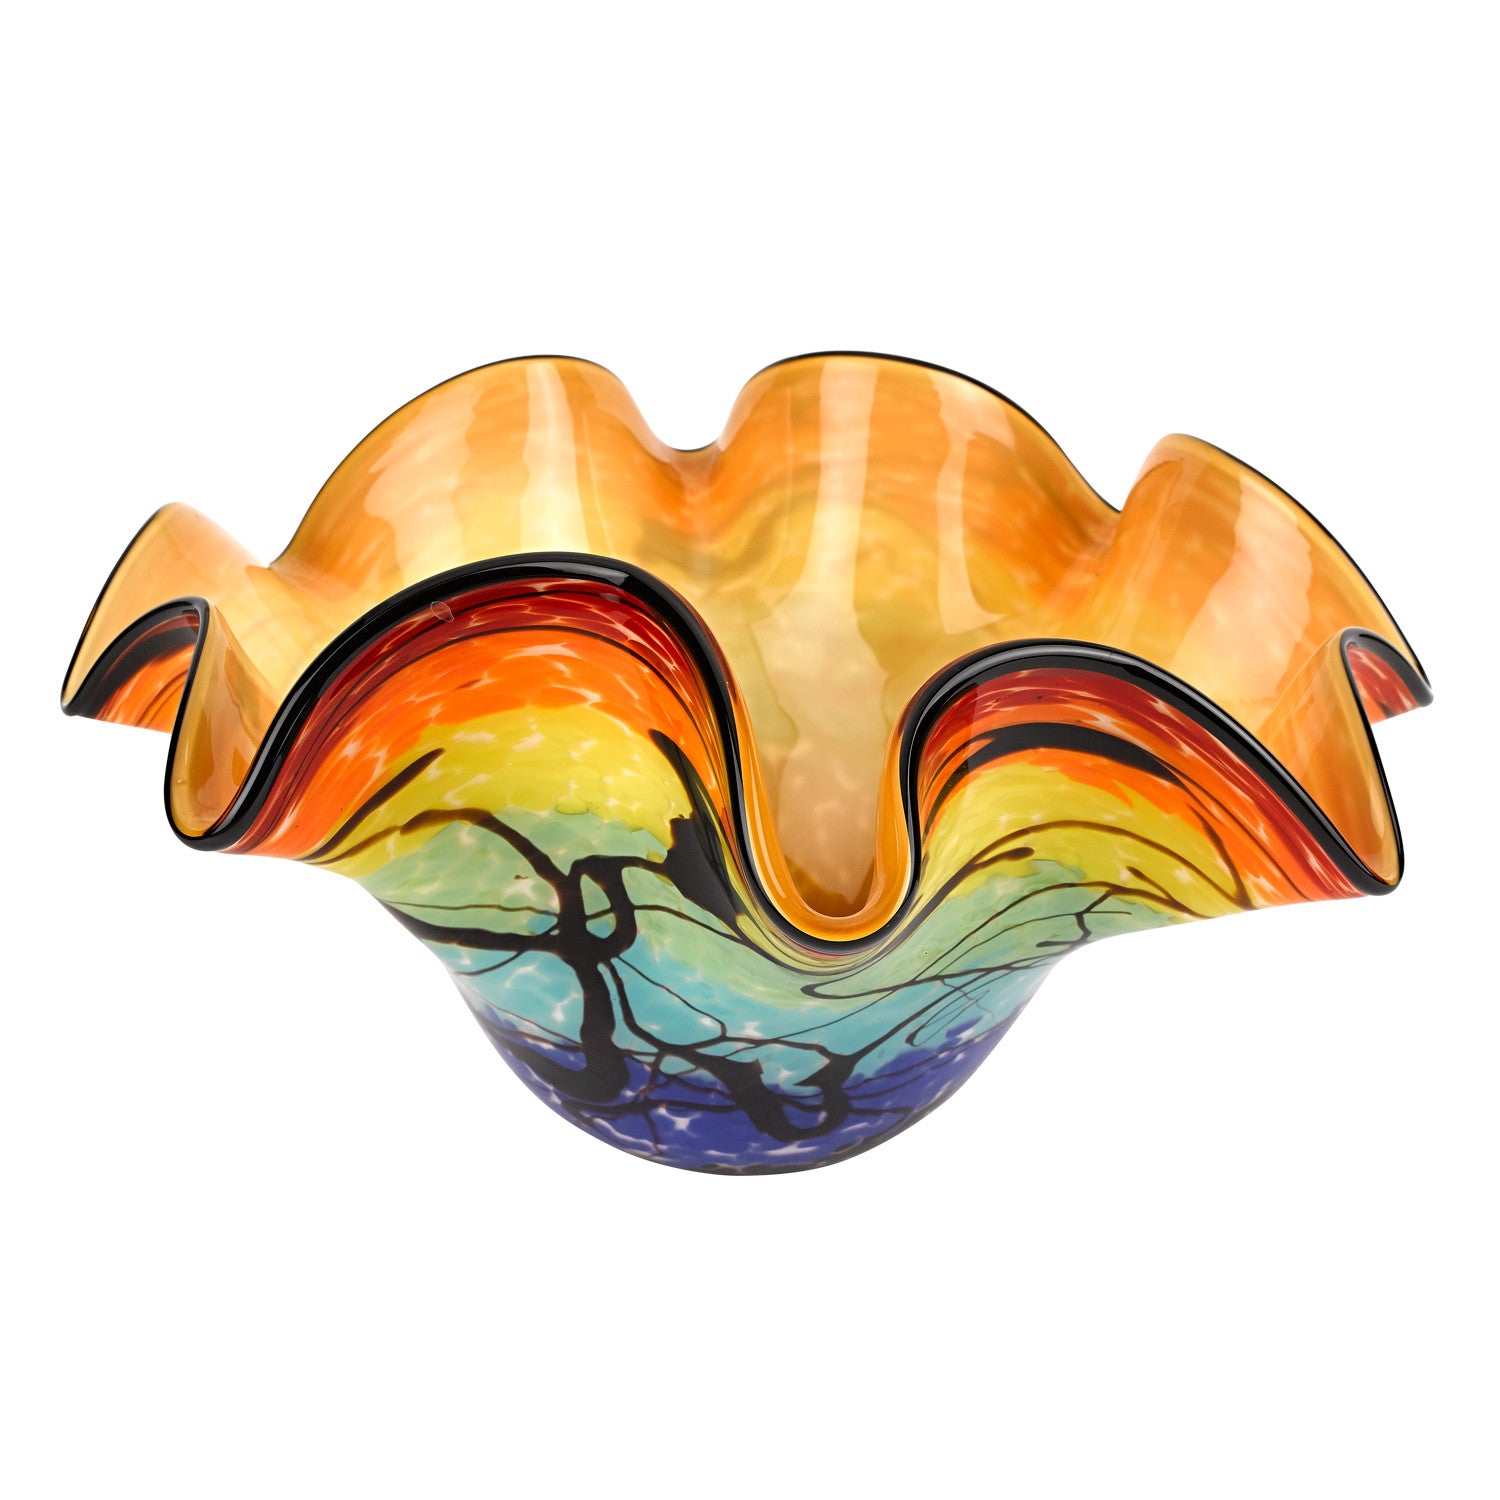 17 Mouth Blown Floppy Design Art Glass Centerpiece Bowl